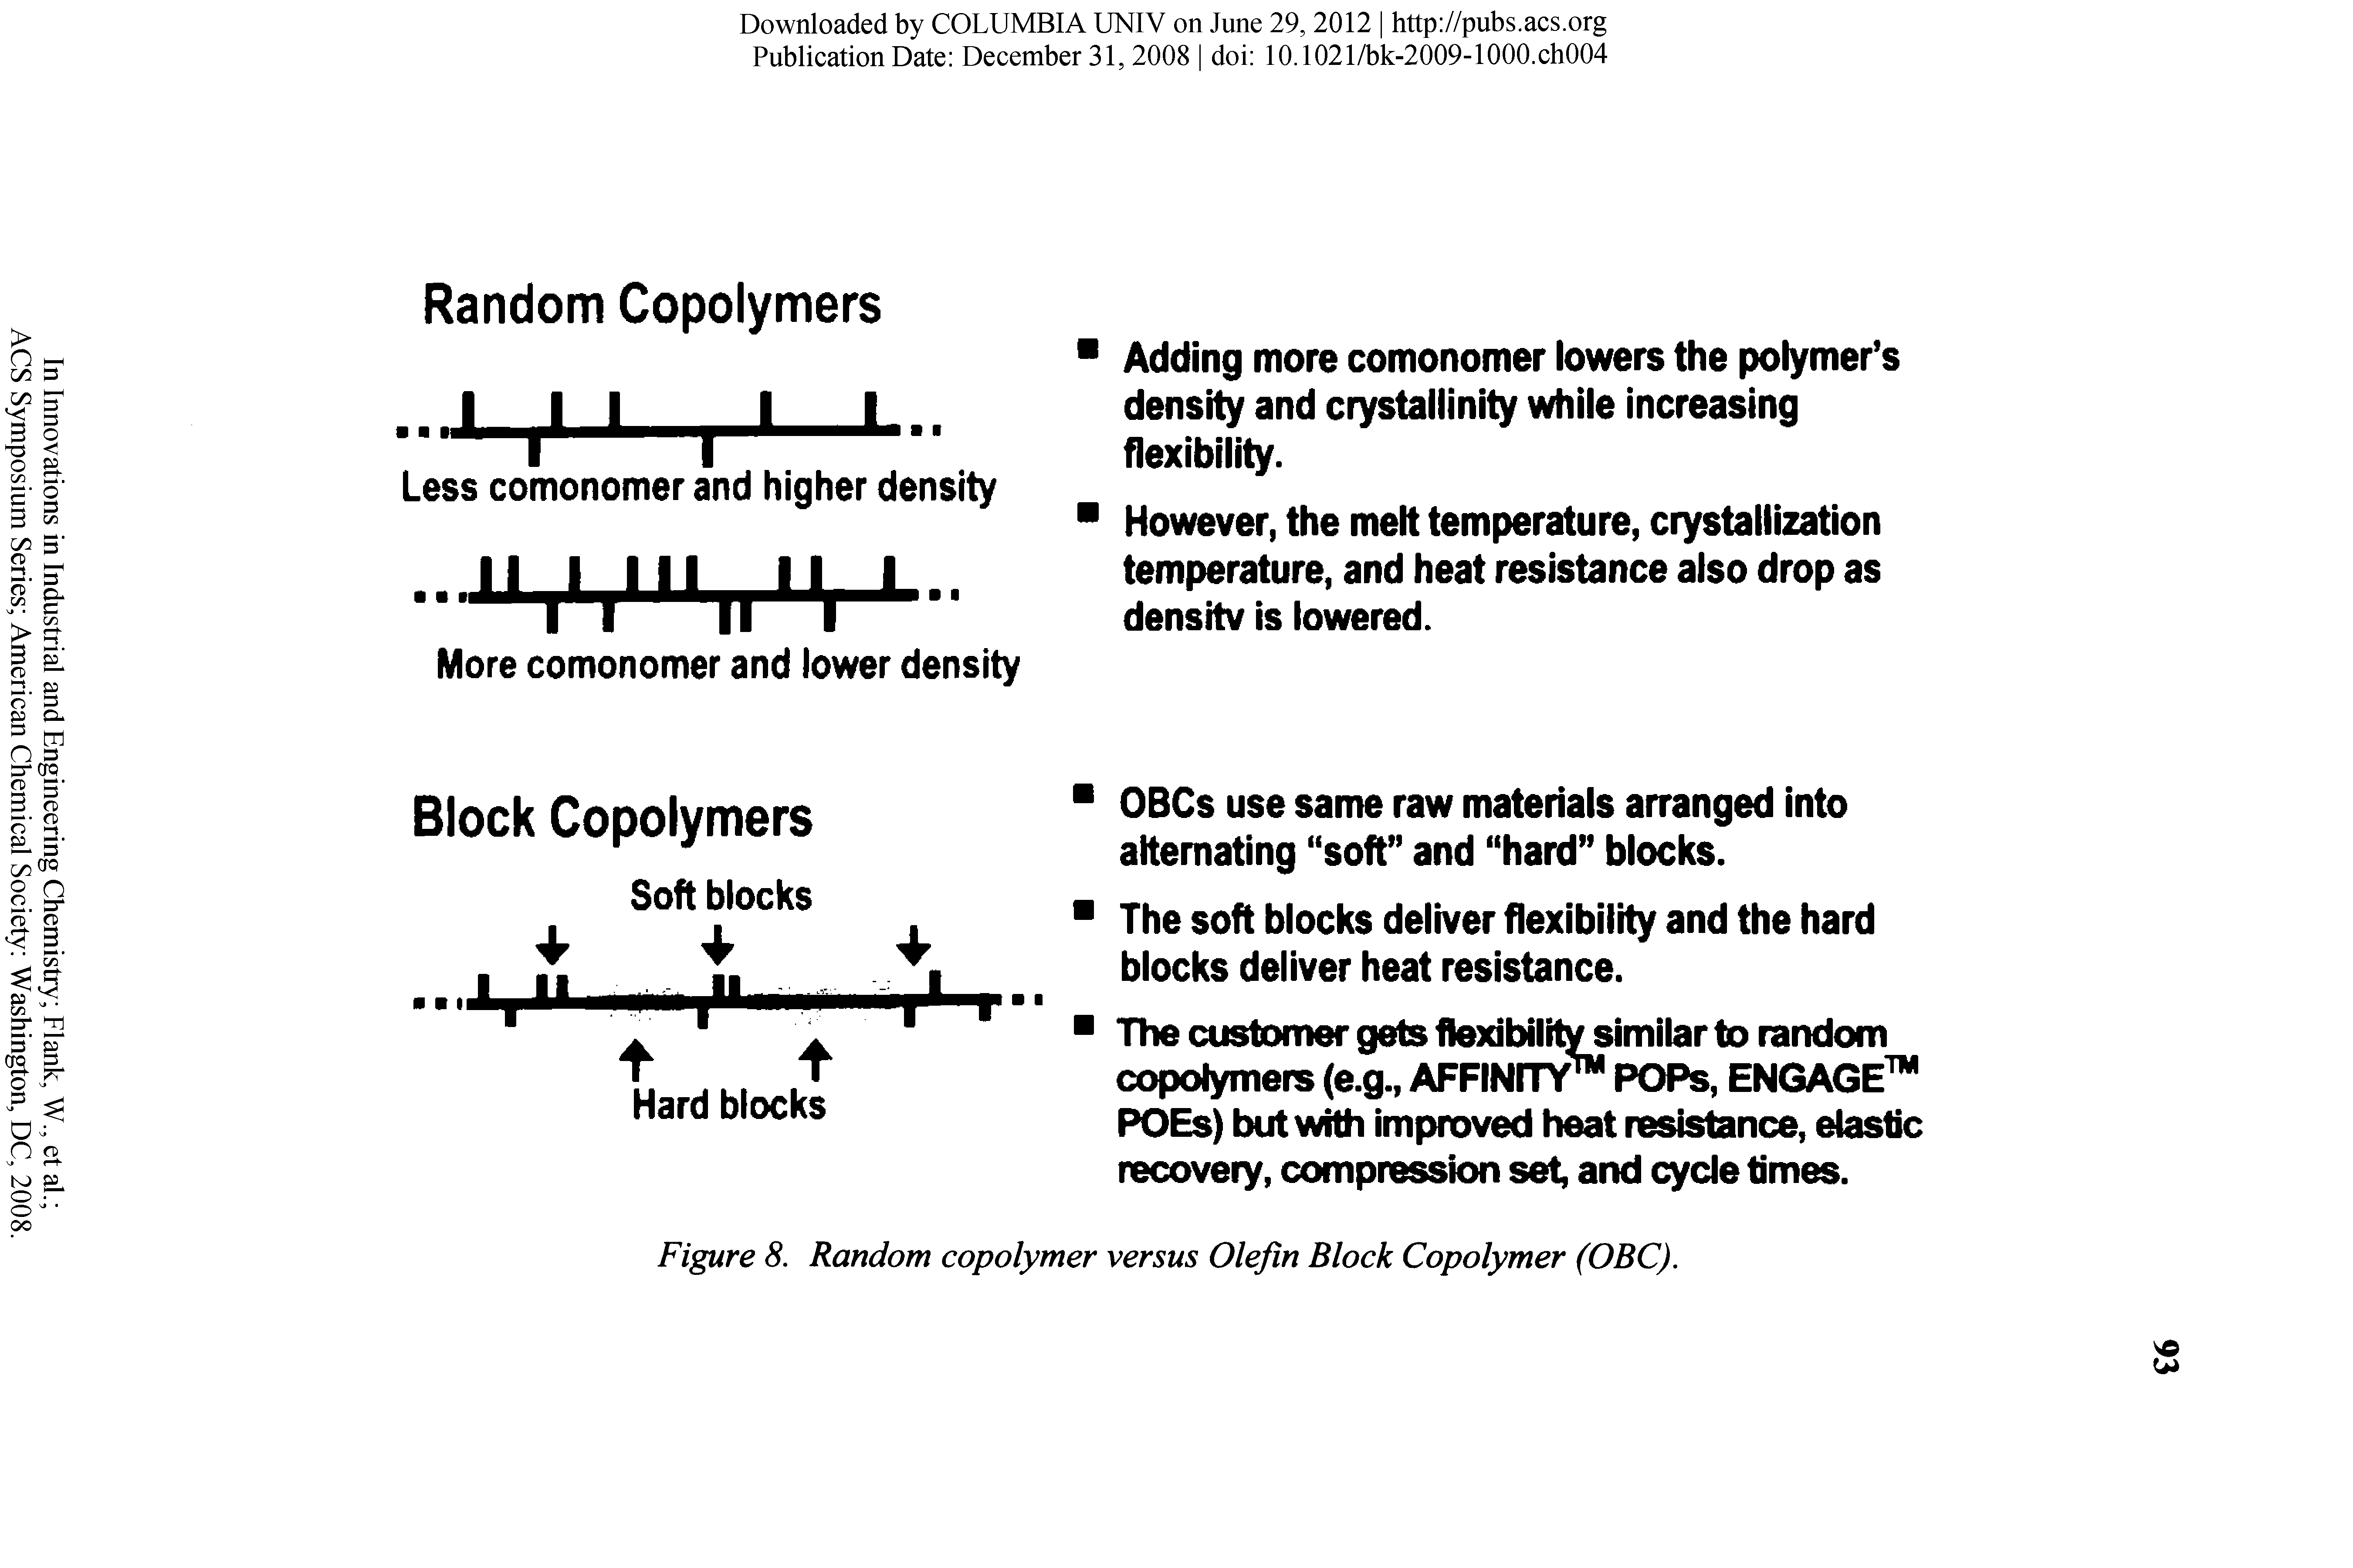 Figure 8. Random copolymer versus Olefin Block Copolymer (OBC).